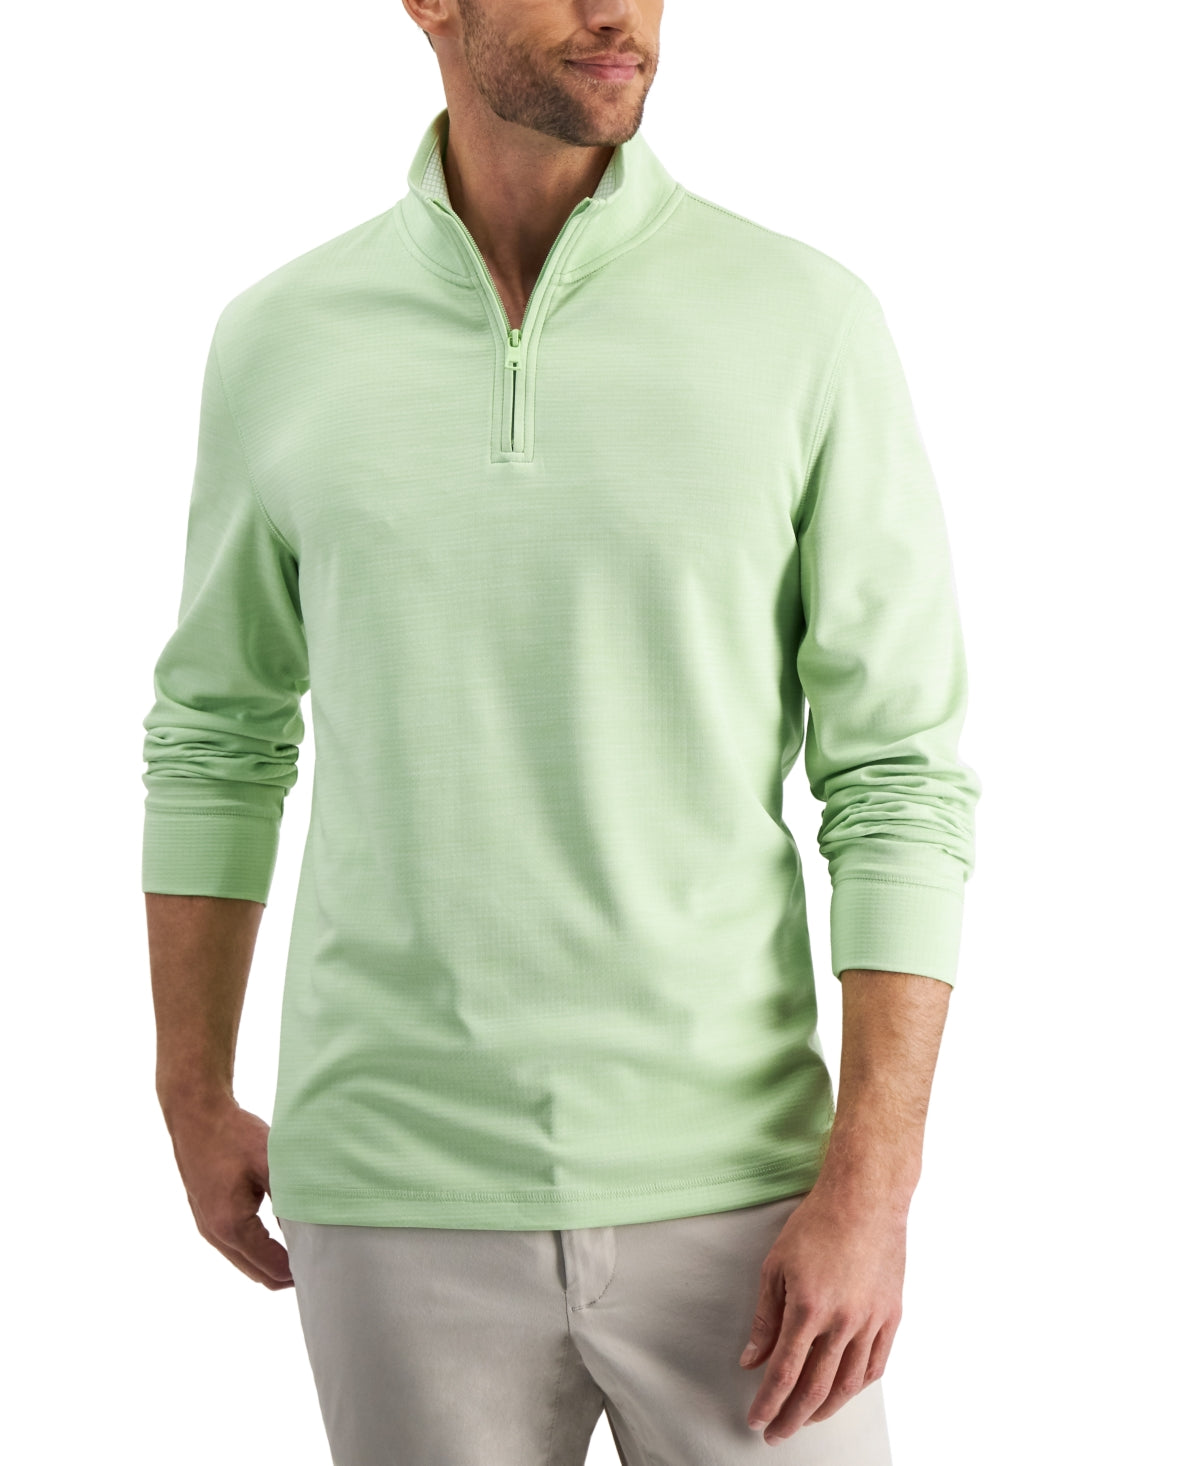 New Club Room Men's Mint Green Quarter-Zip Tech Sweatshirt Size Large